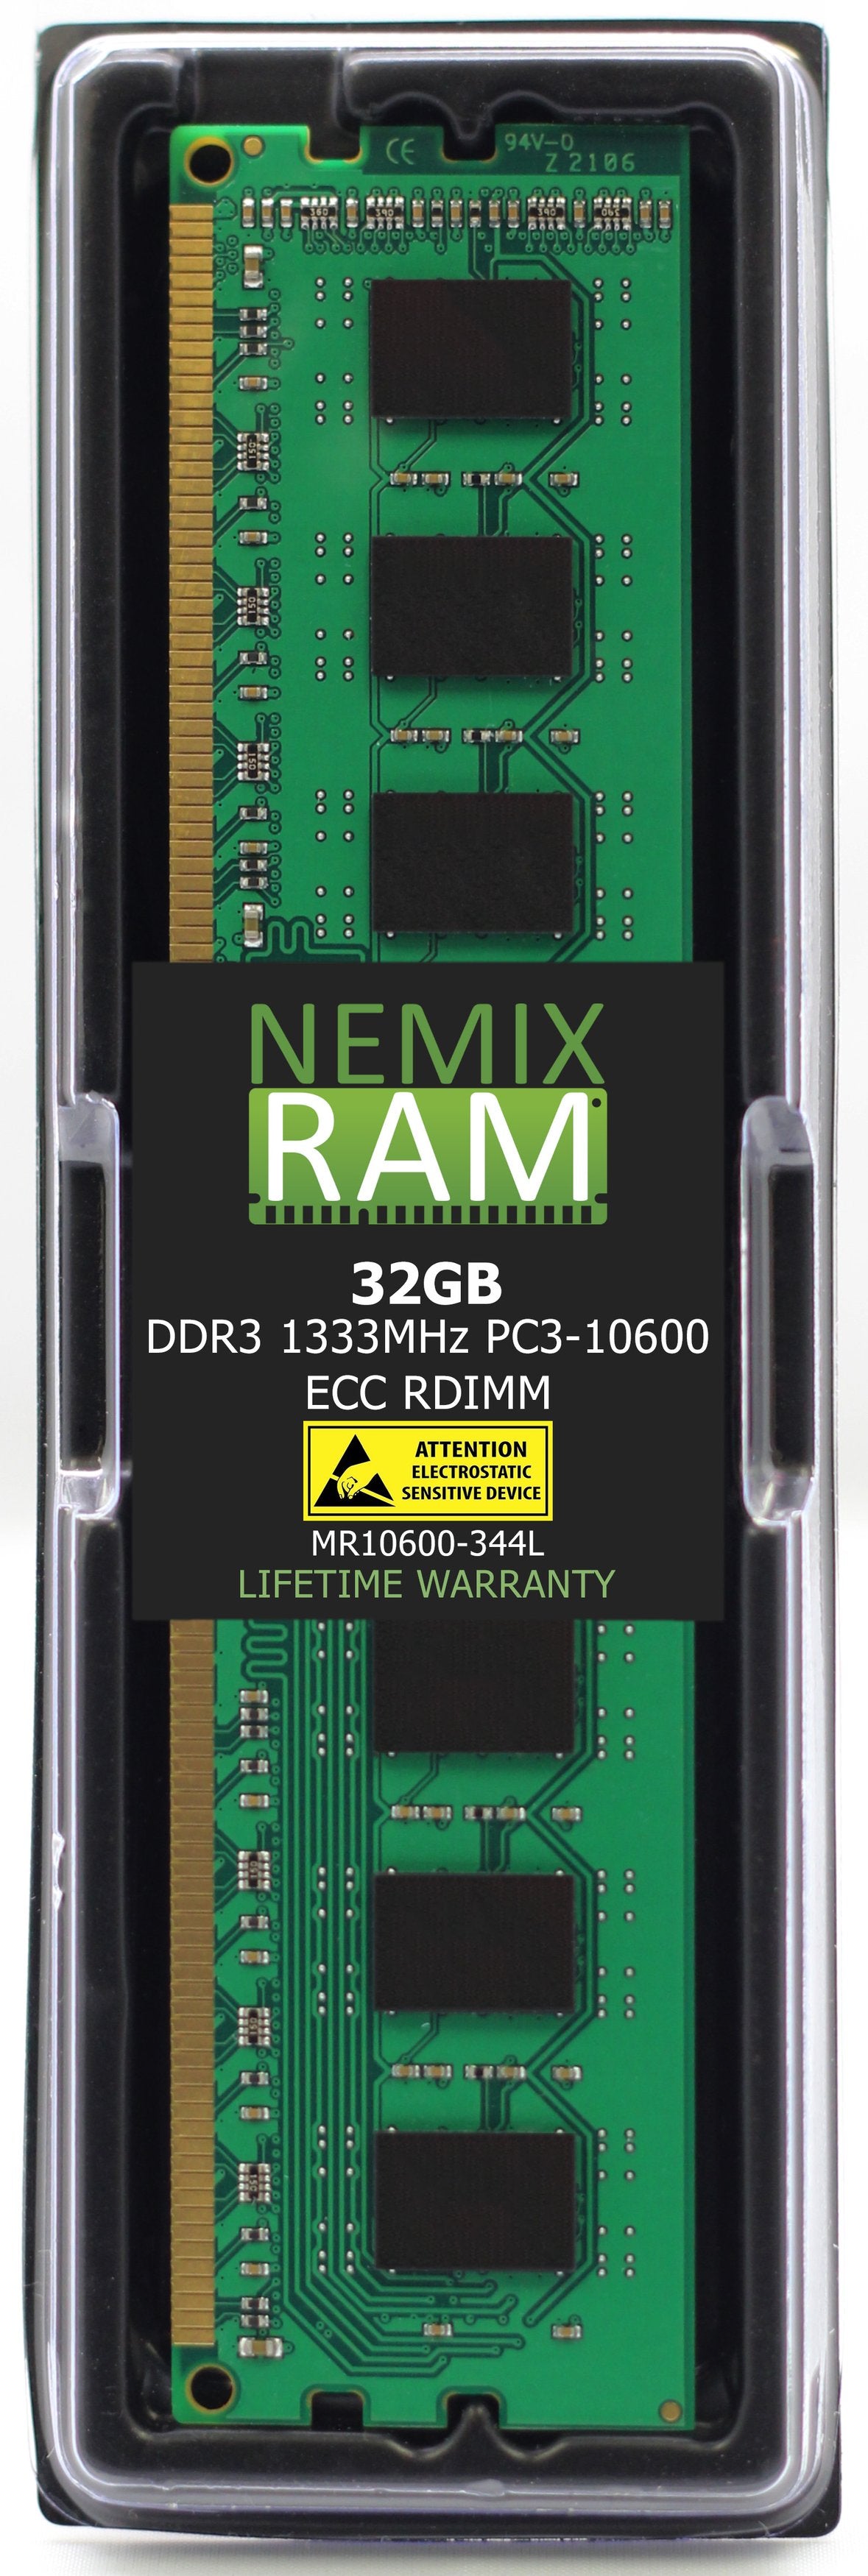 Hynix HMT84GR7DMR4A-H9 32GB DDR3 1333MHZ PC3-10600 RDIMM Compatible Memory Module